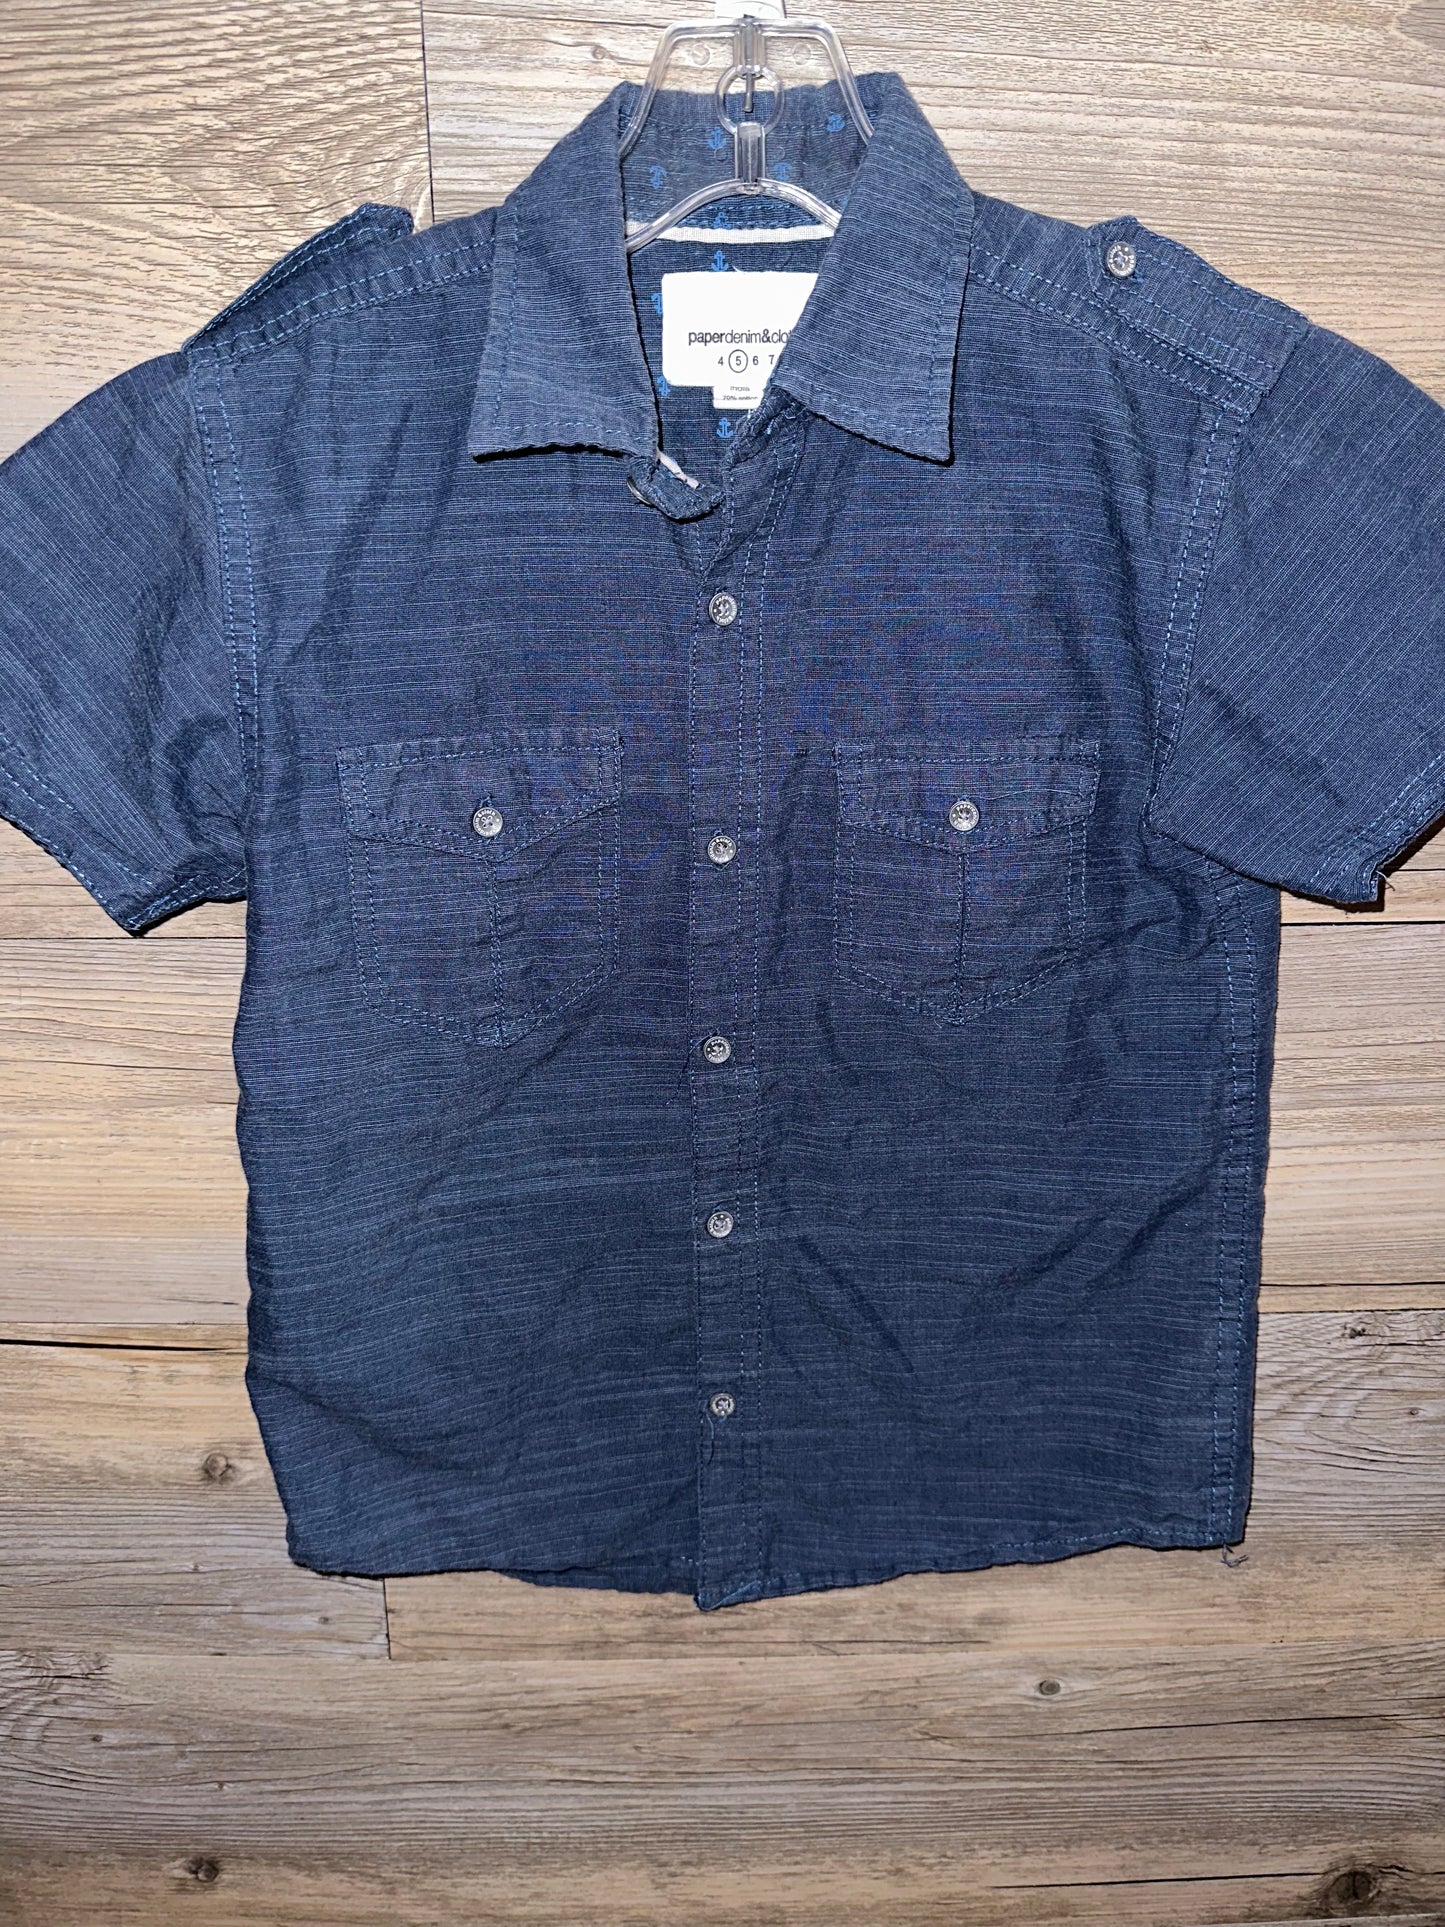 PaperDenim&Cloth Shirt, Size 5T